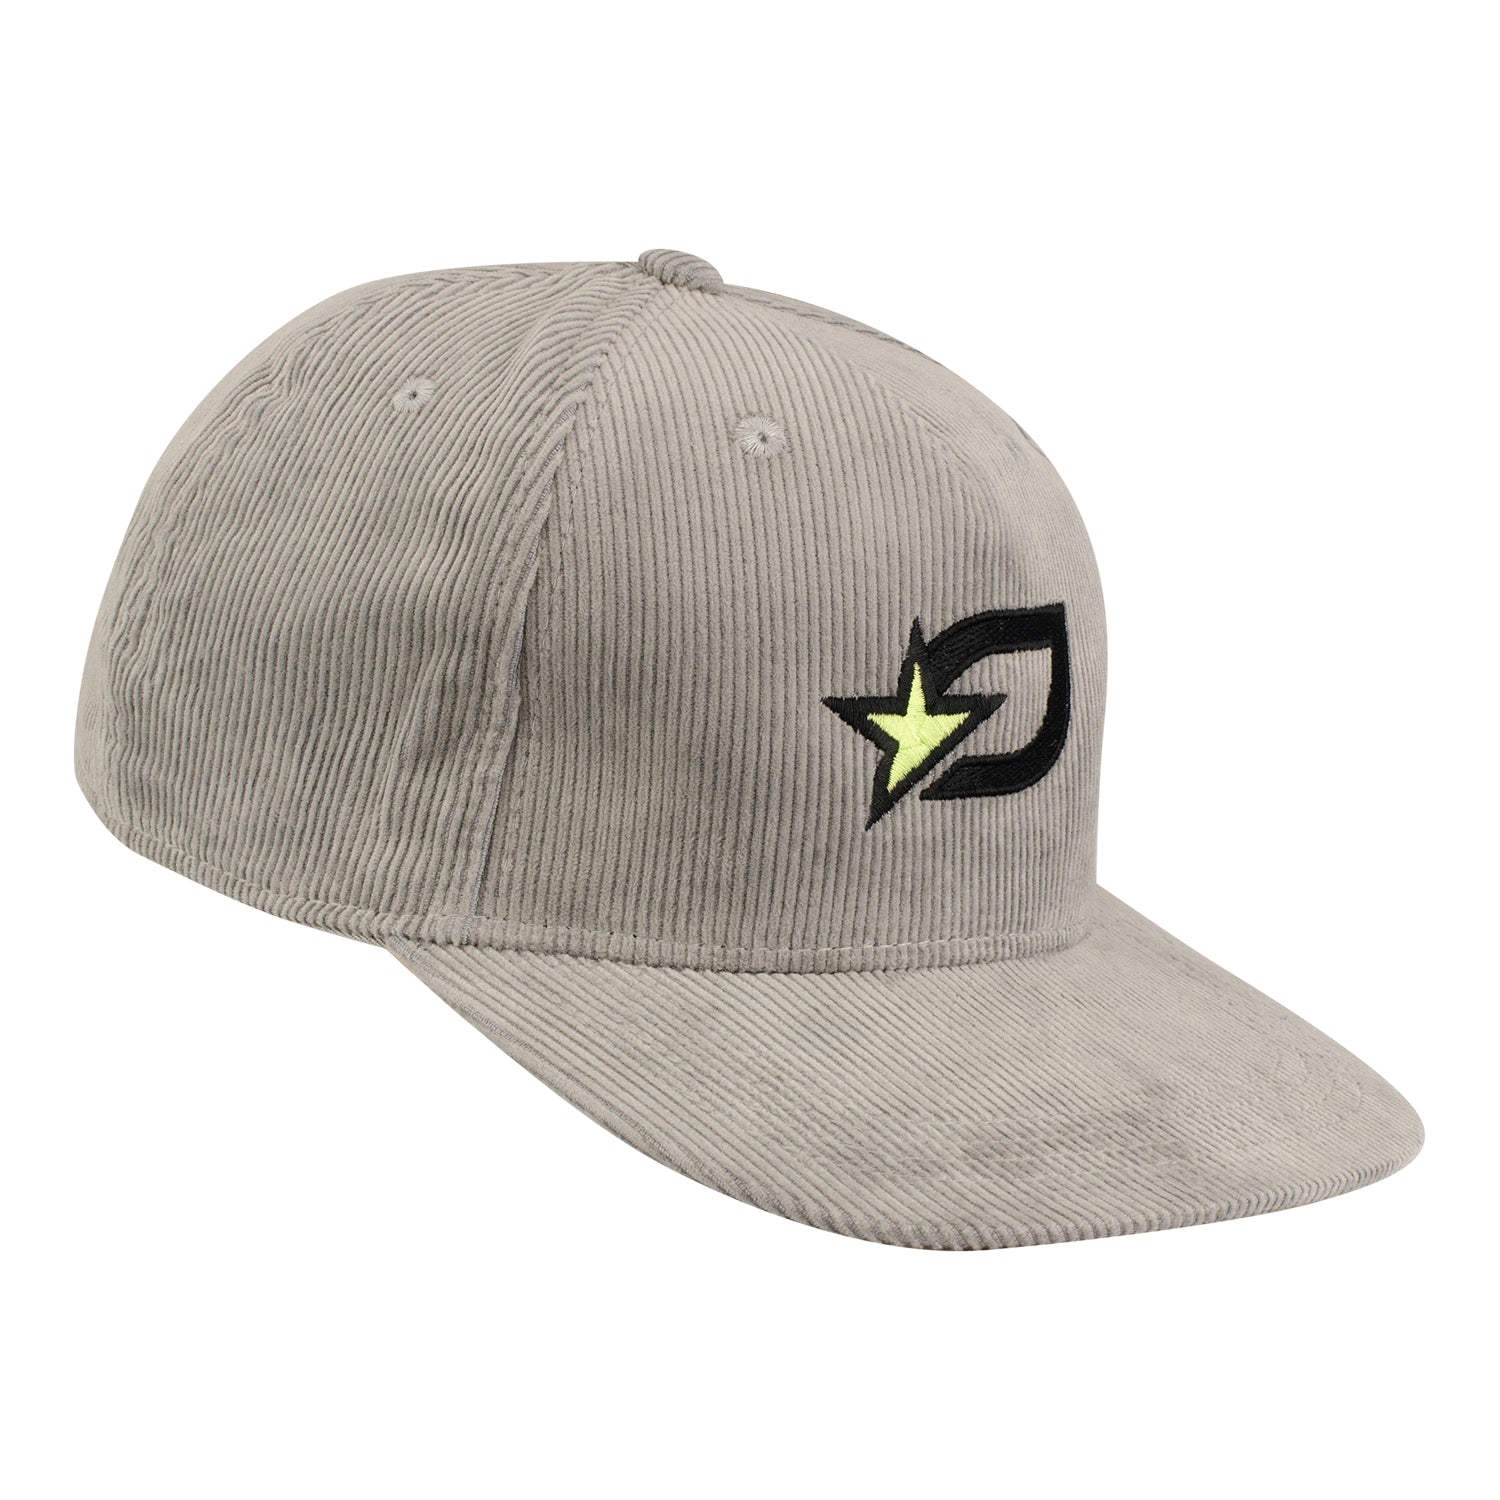 Shop Duty of – Corduroy Texas Call OpTic League Hat